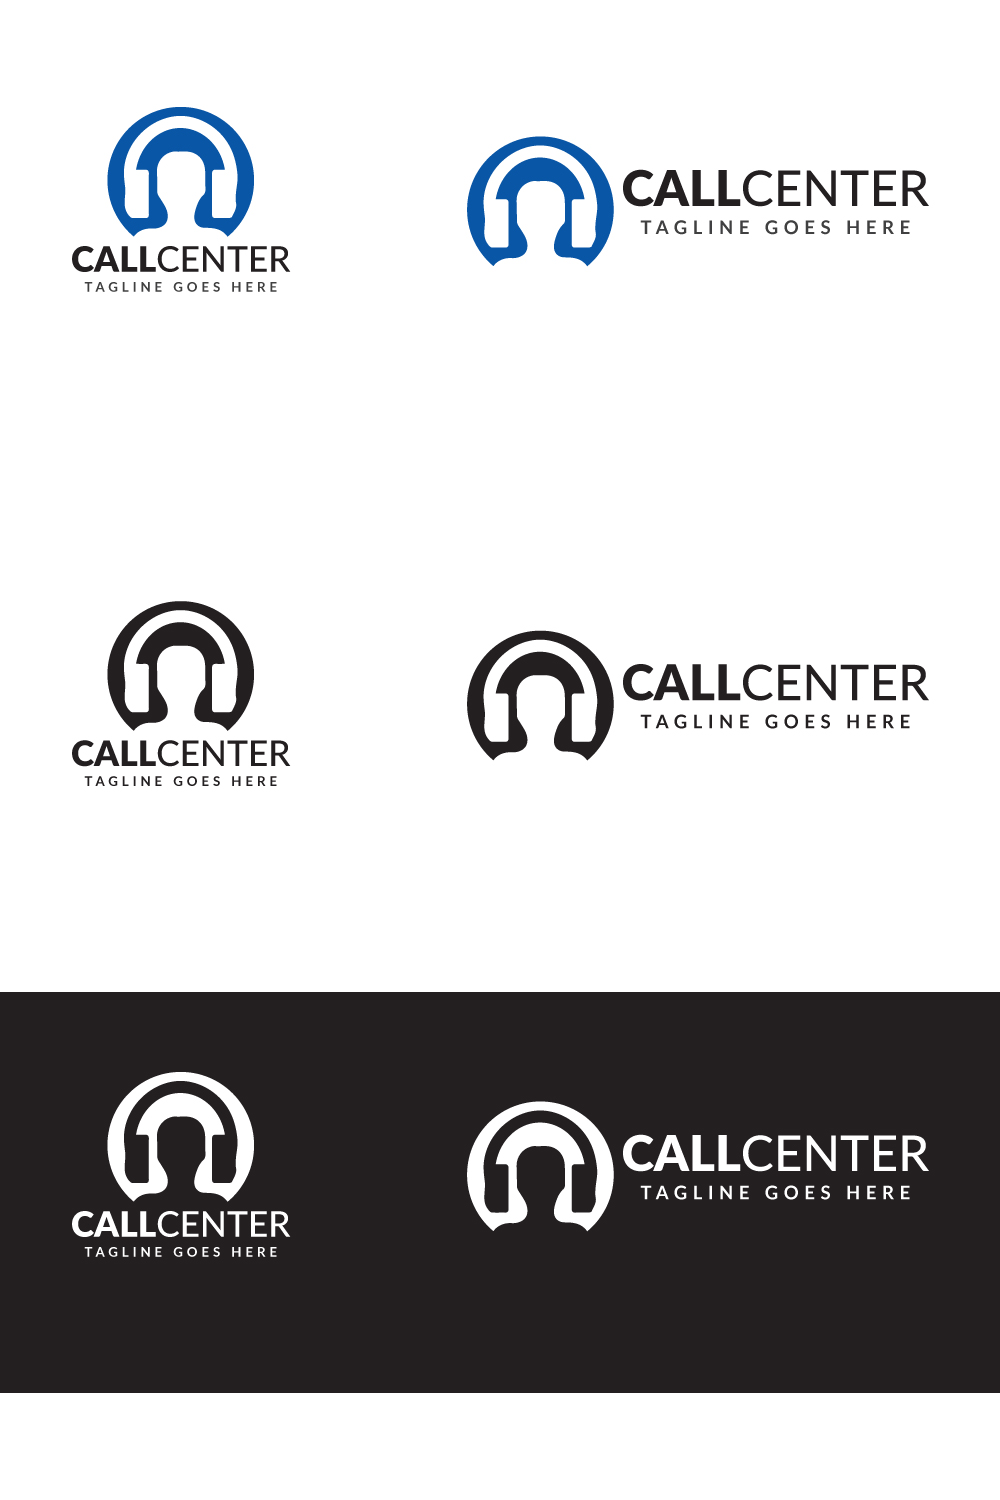 Call Center or customer logo, call logo, customer logo, head phones logo pinterest preview image.